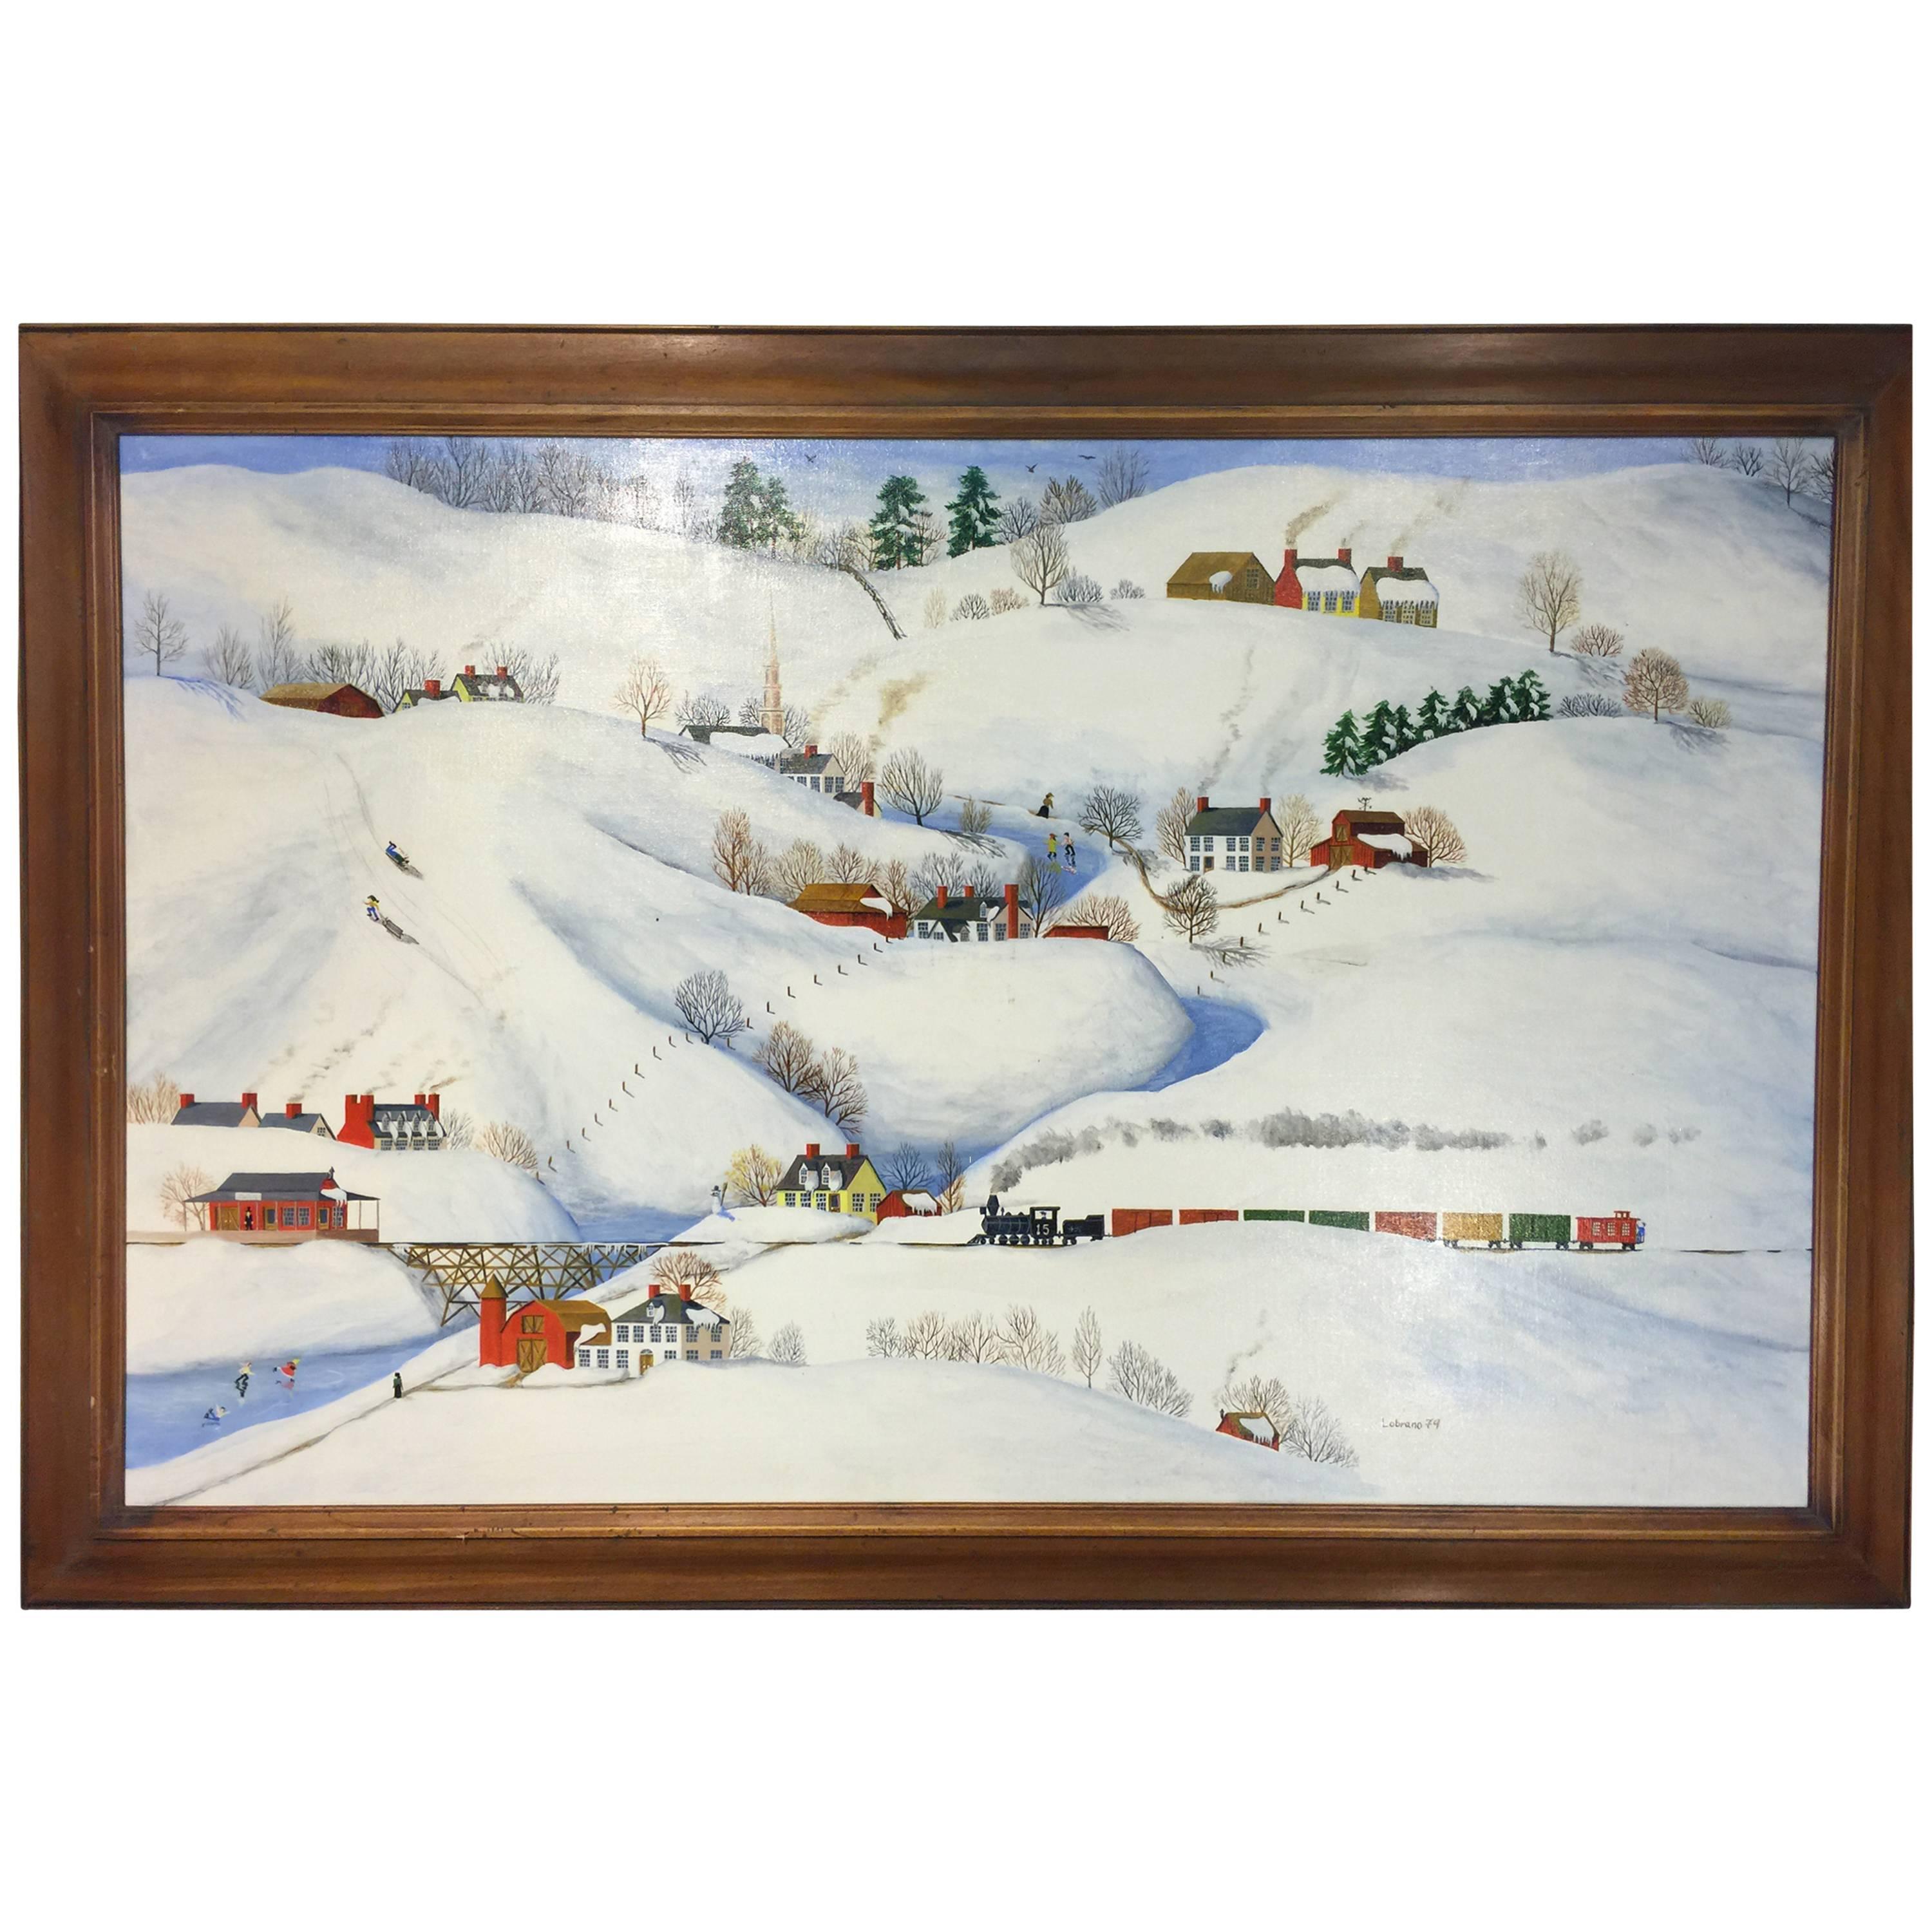 Folk Art Painting of a Snow Scene by American Artist Dewitt Jones Lobrano